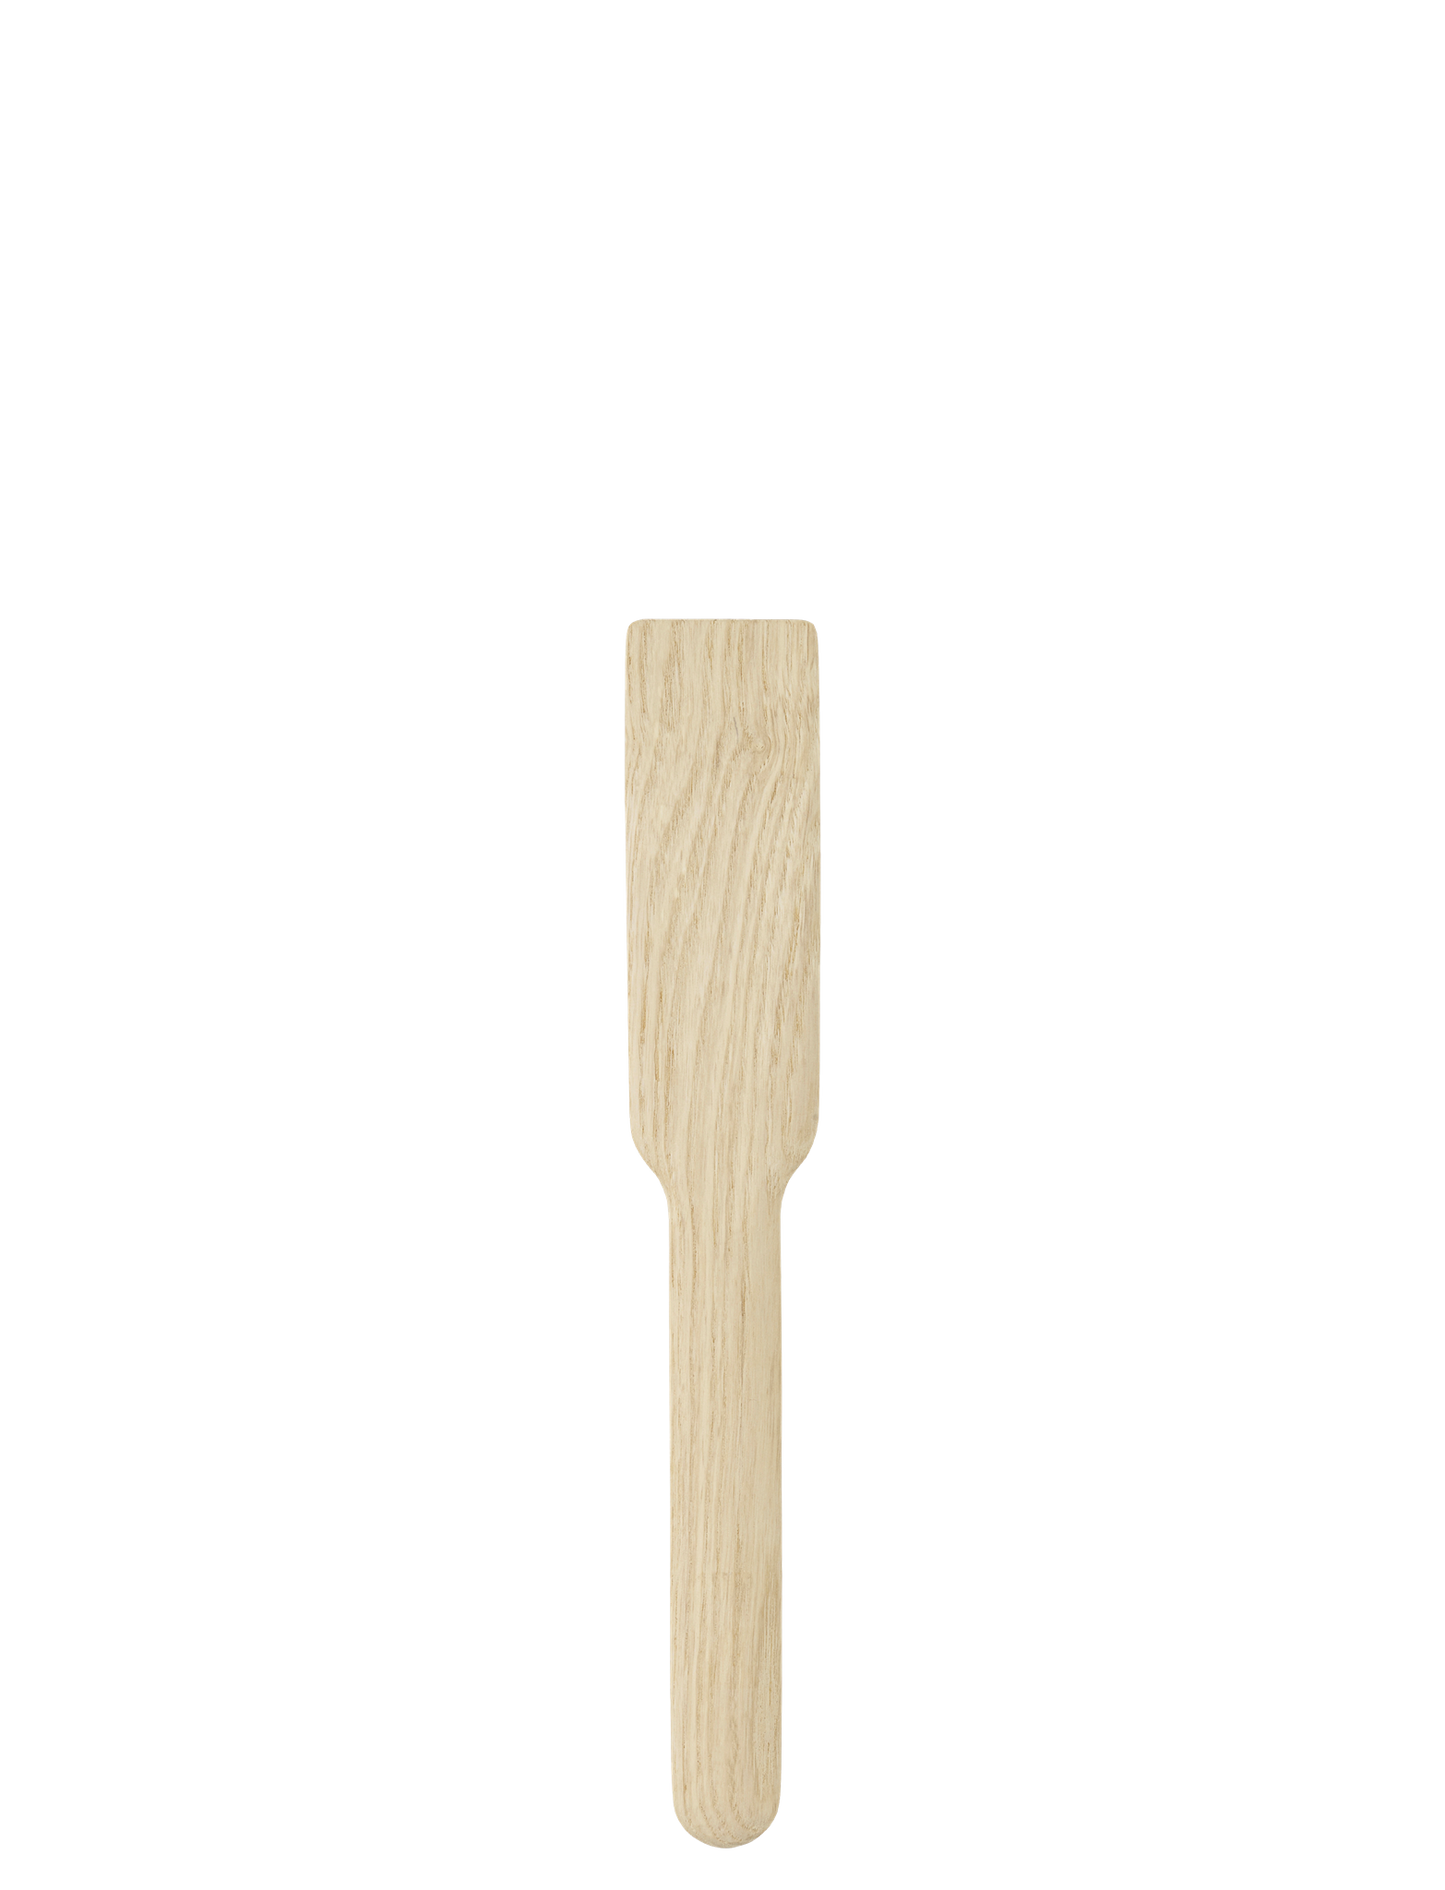 EASY scramble spatula oak by EASY pastry spatula oak by Rig-Tig - Curated Home Decor